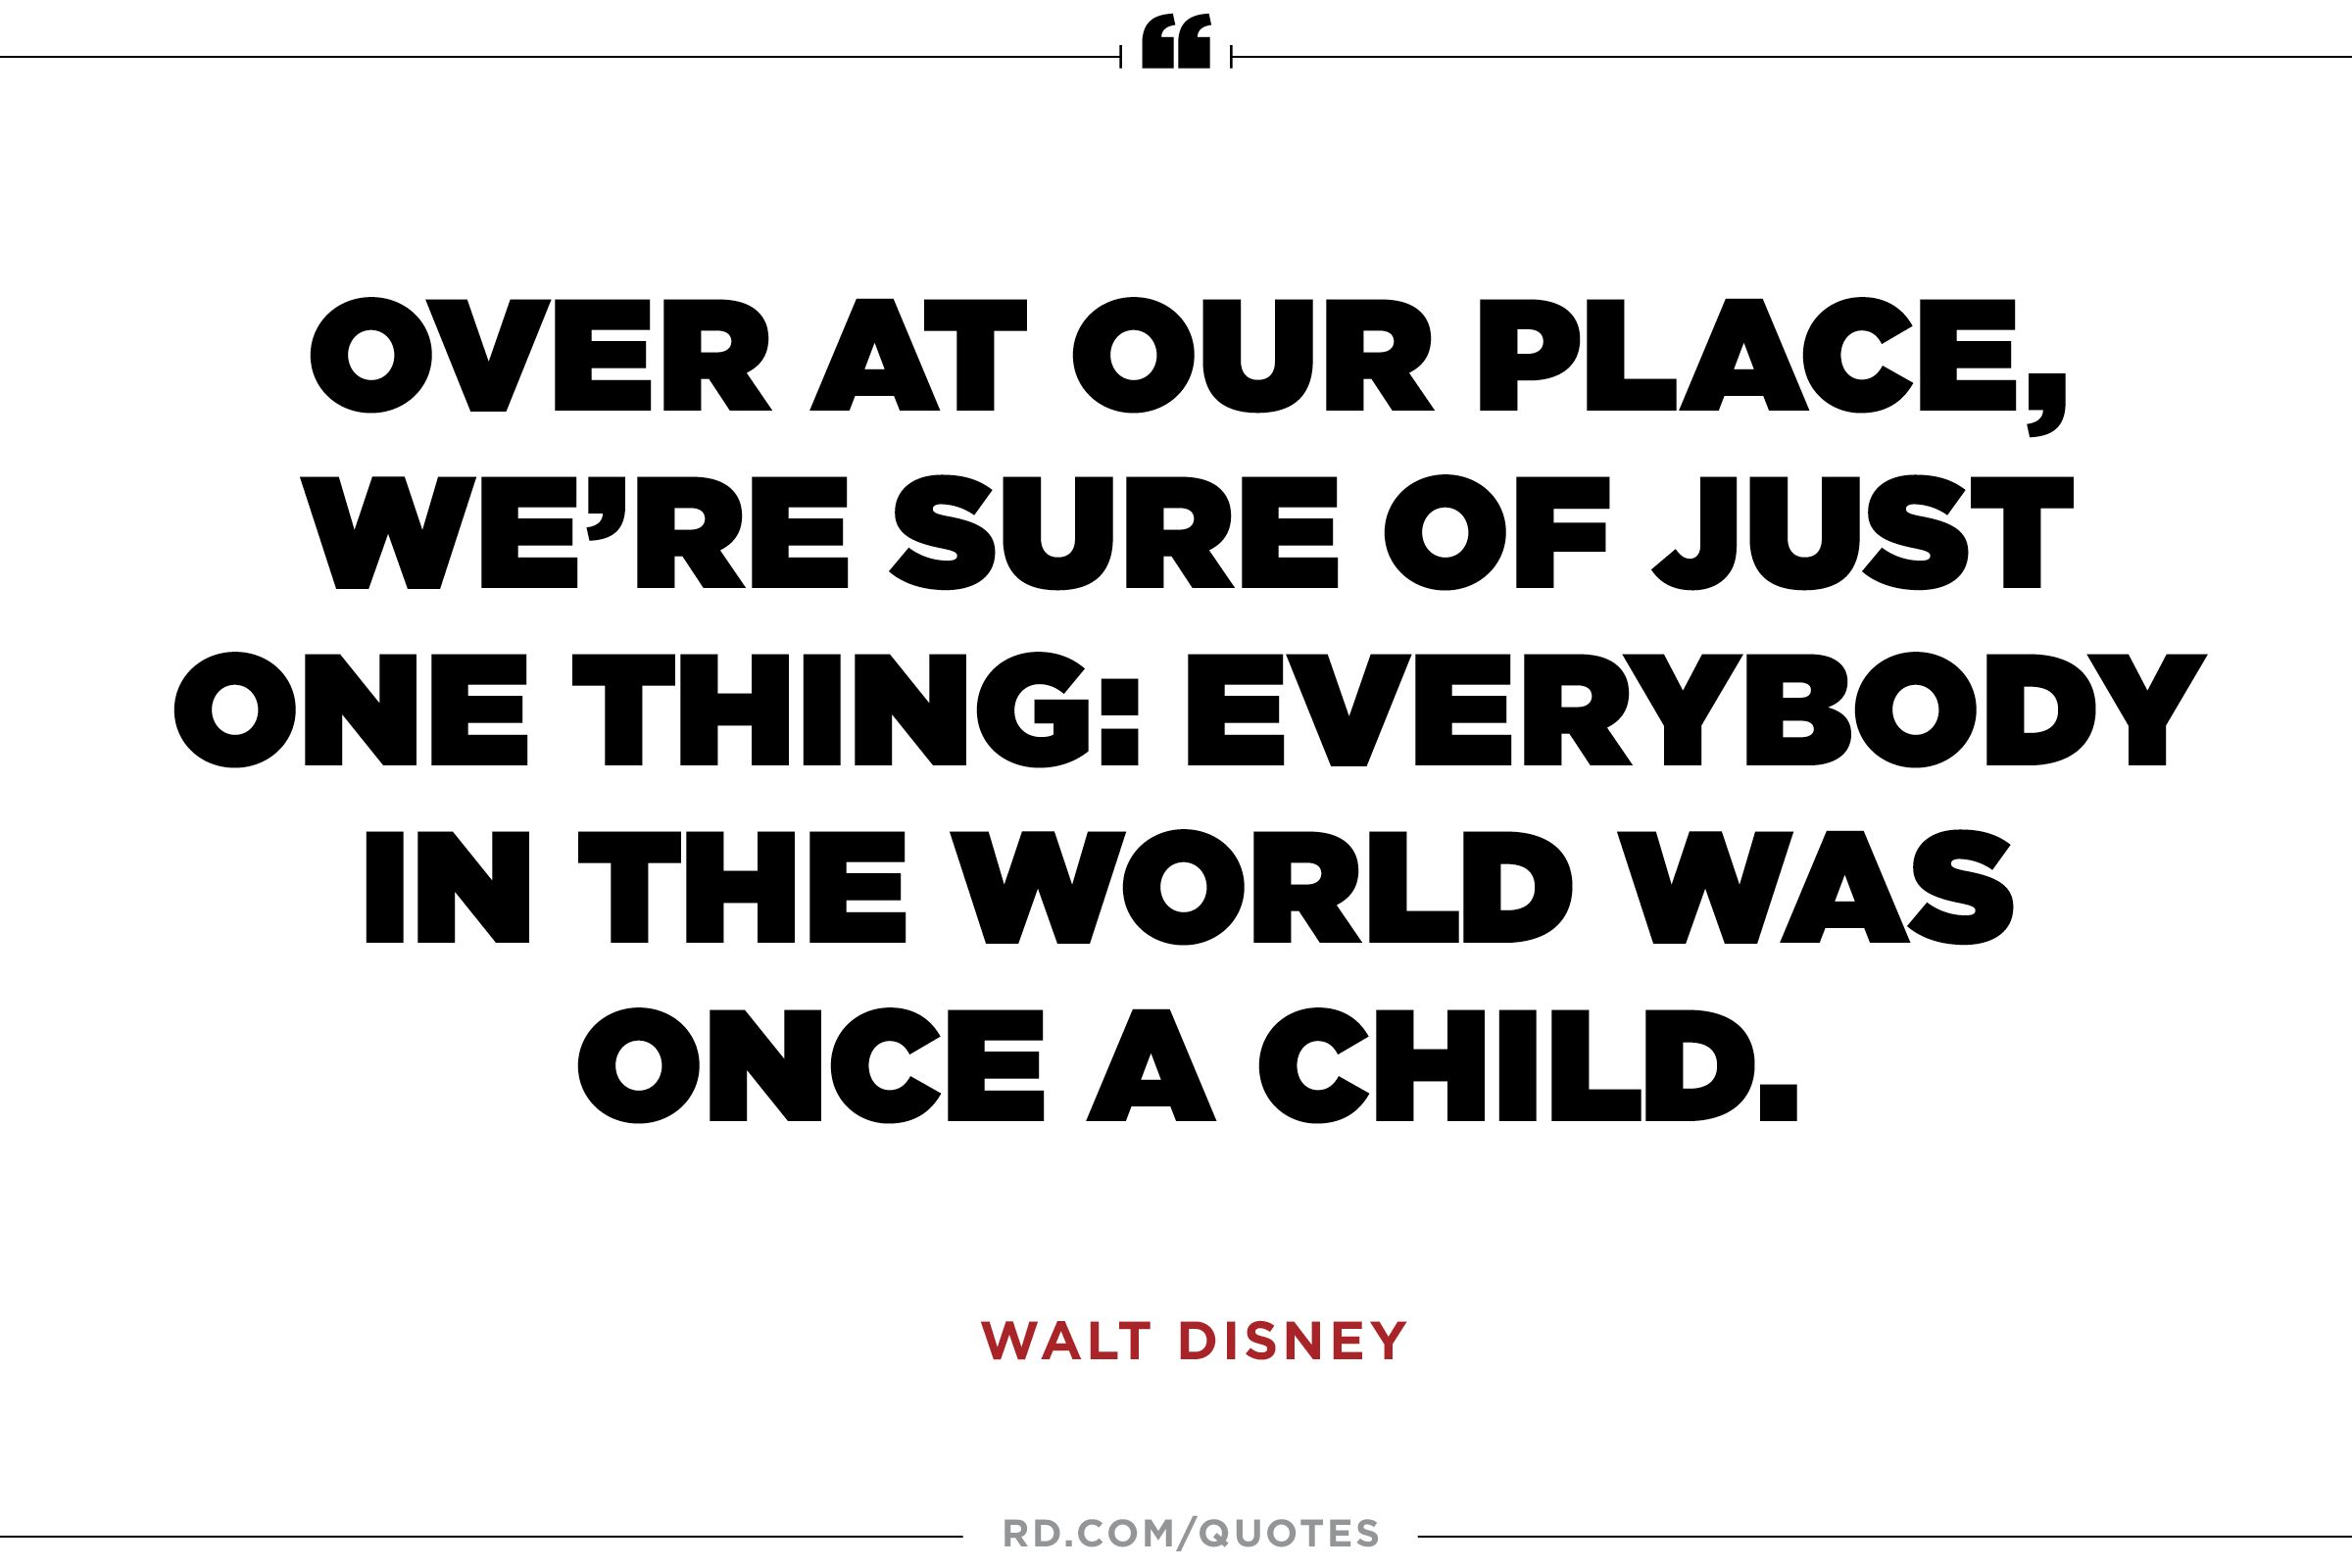 11 Inspiring Walt Disney Quotes | Reader's Digest